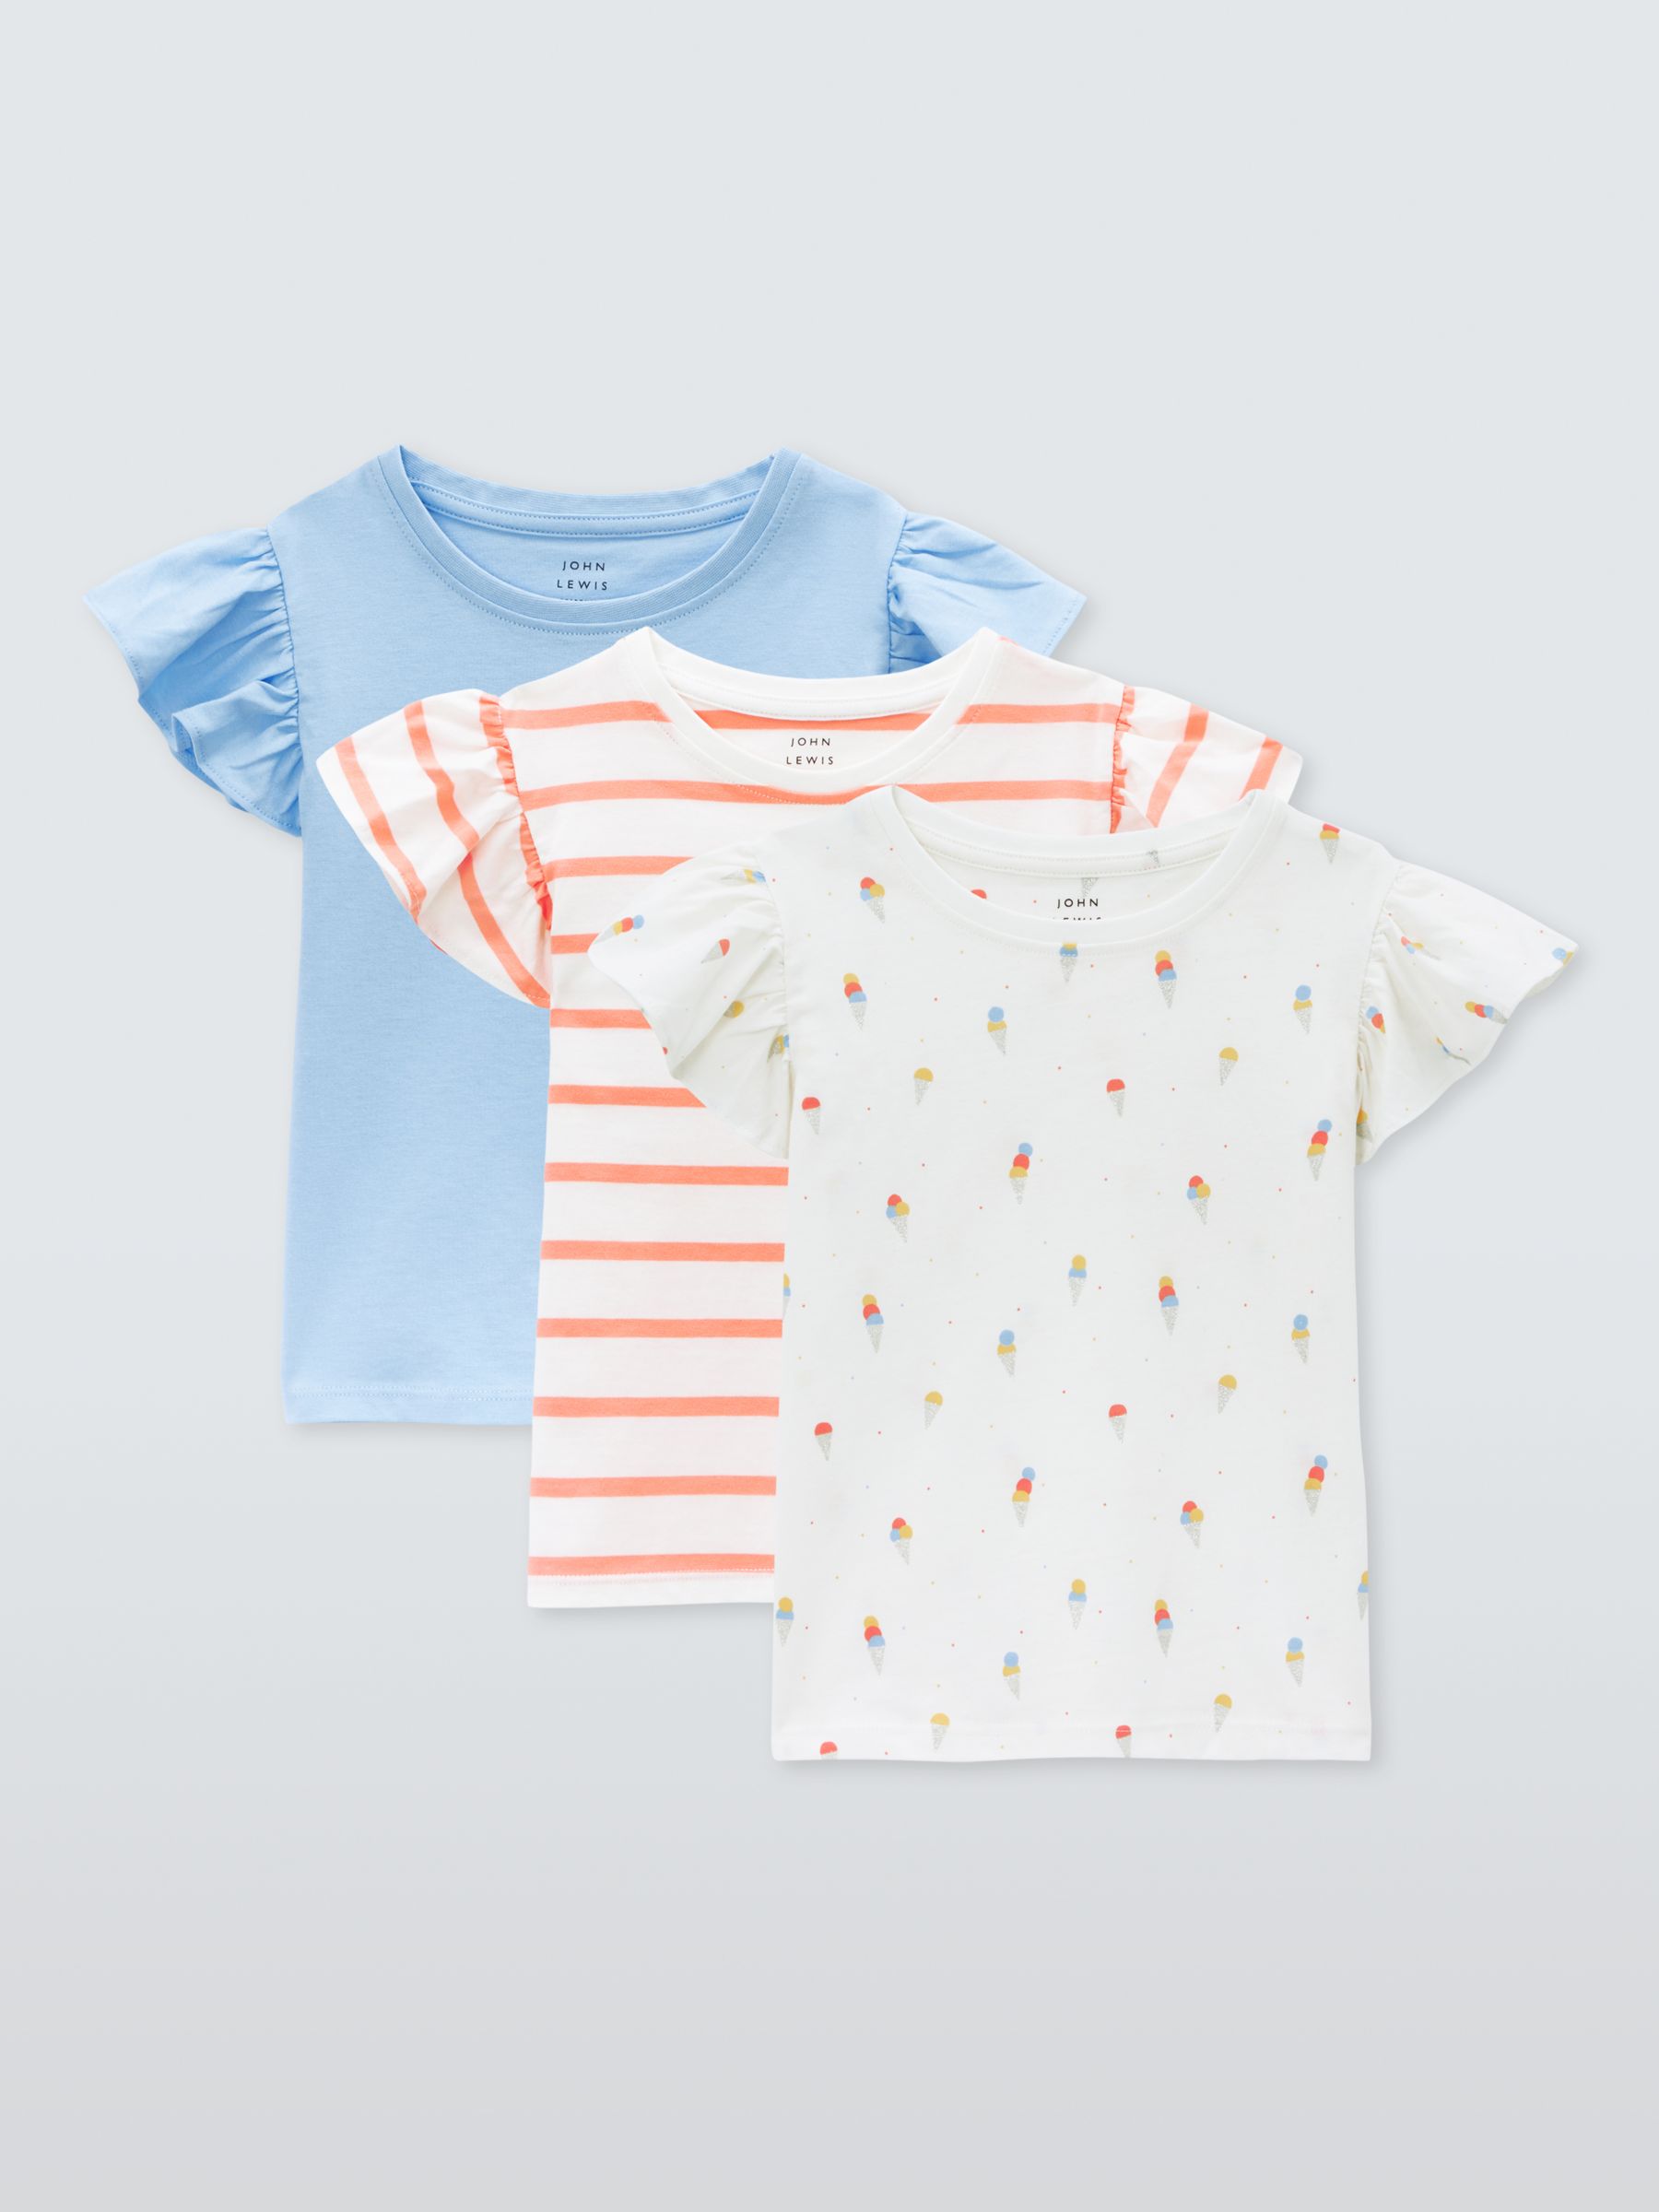 John Lewis Kids' Plain/Stripe/Ice Cream Frill Sleeve T-Shirts, Pack of 3, Multi, 7 years